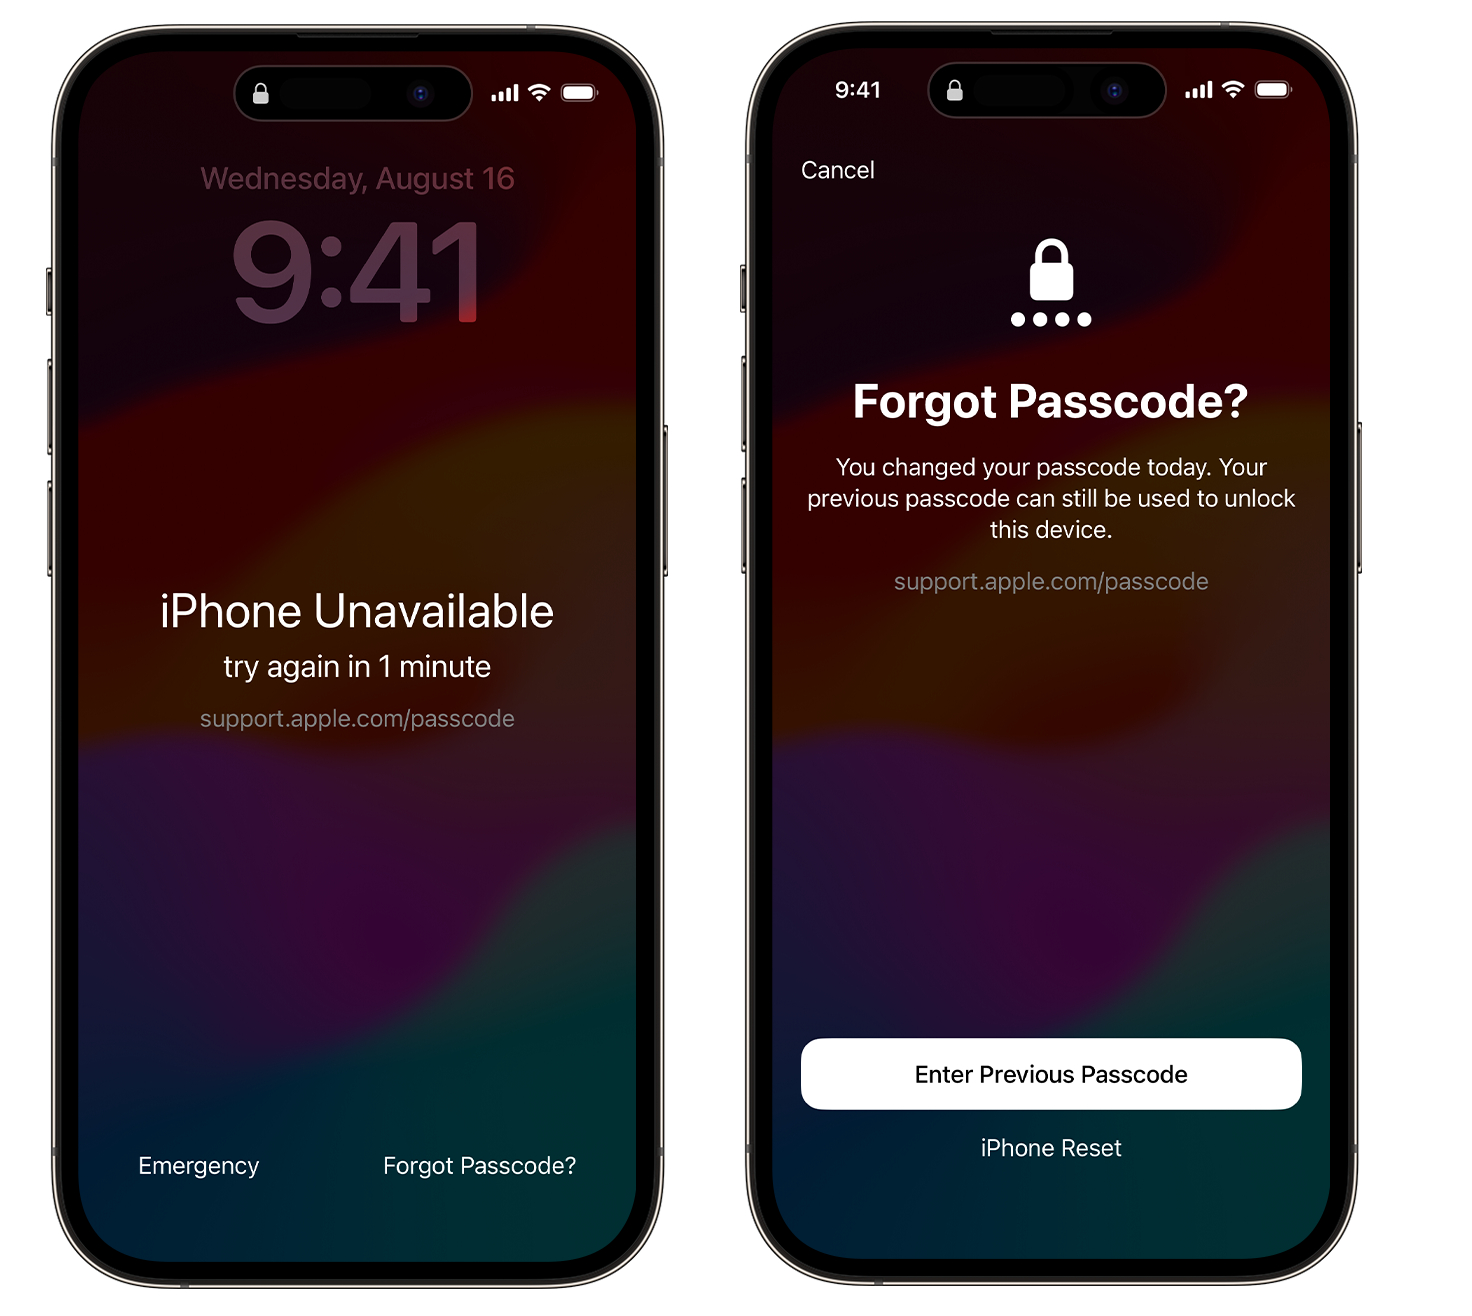 iphone忘記螢幕密碼怎麼辦，3種免電腦解鎖方法! - iPhone忘記密碼 - 敗家達人推薦